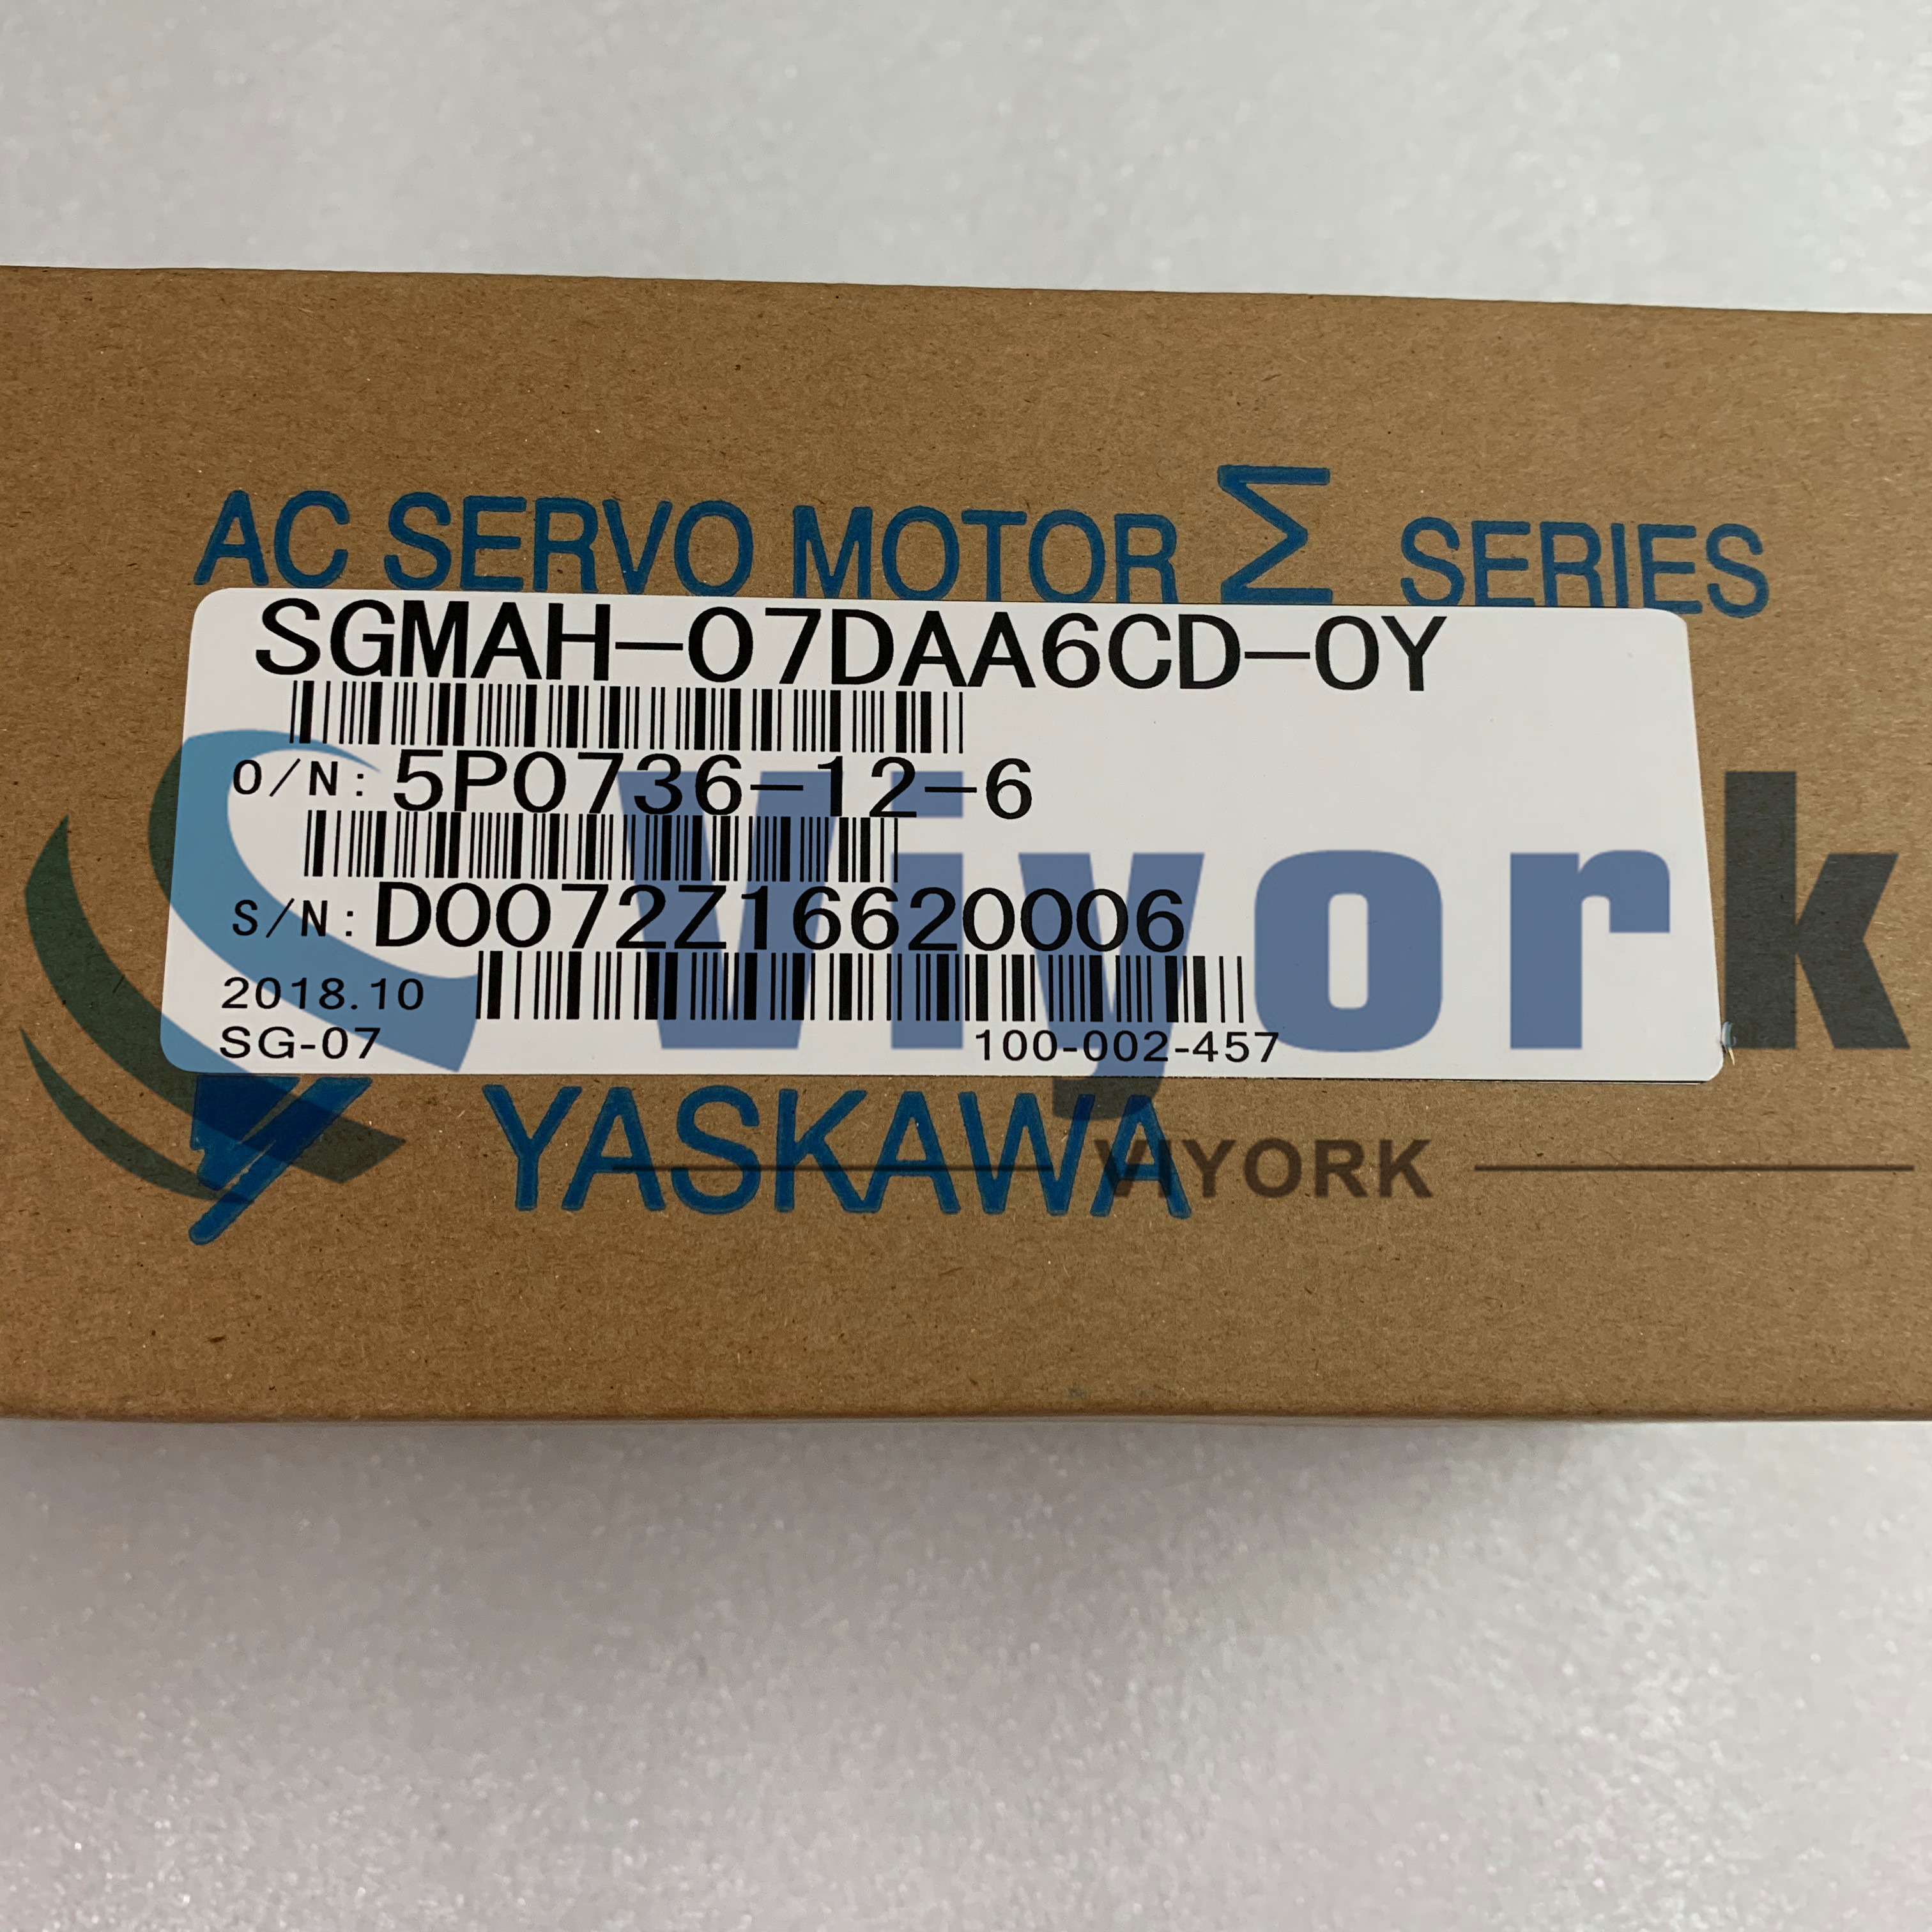 NEW Yaskawa SGMAH-07DAA6CD-OY AC SERVO MOTOR